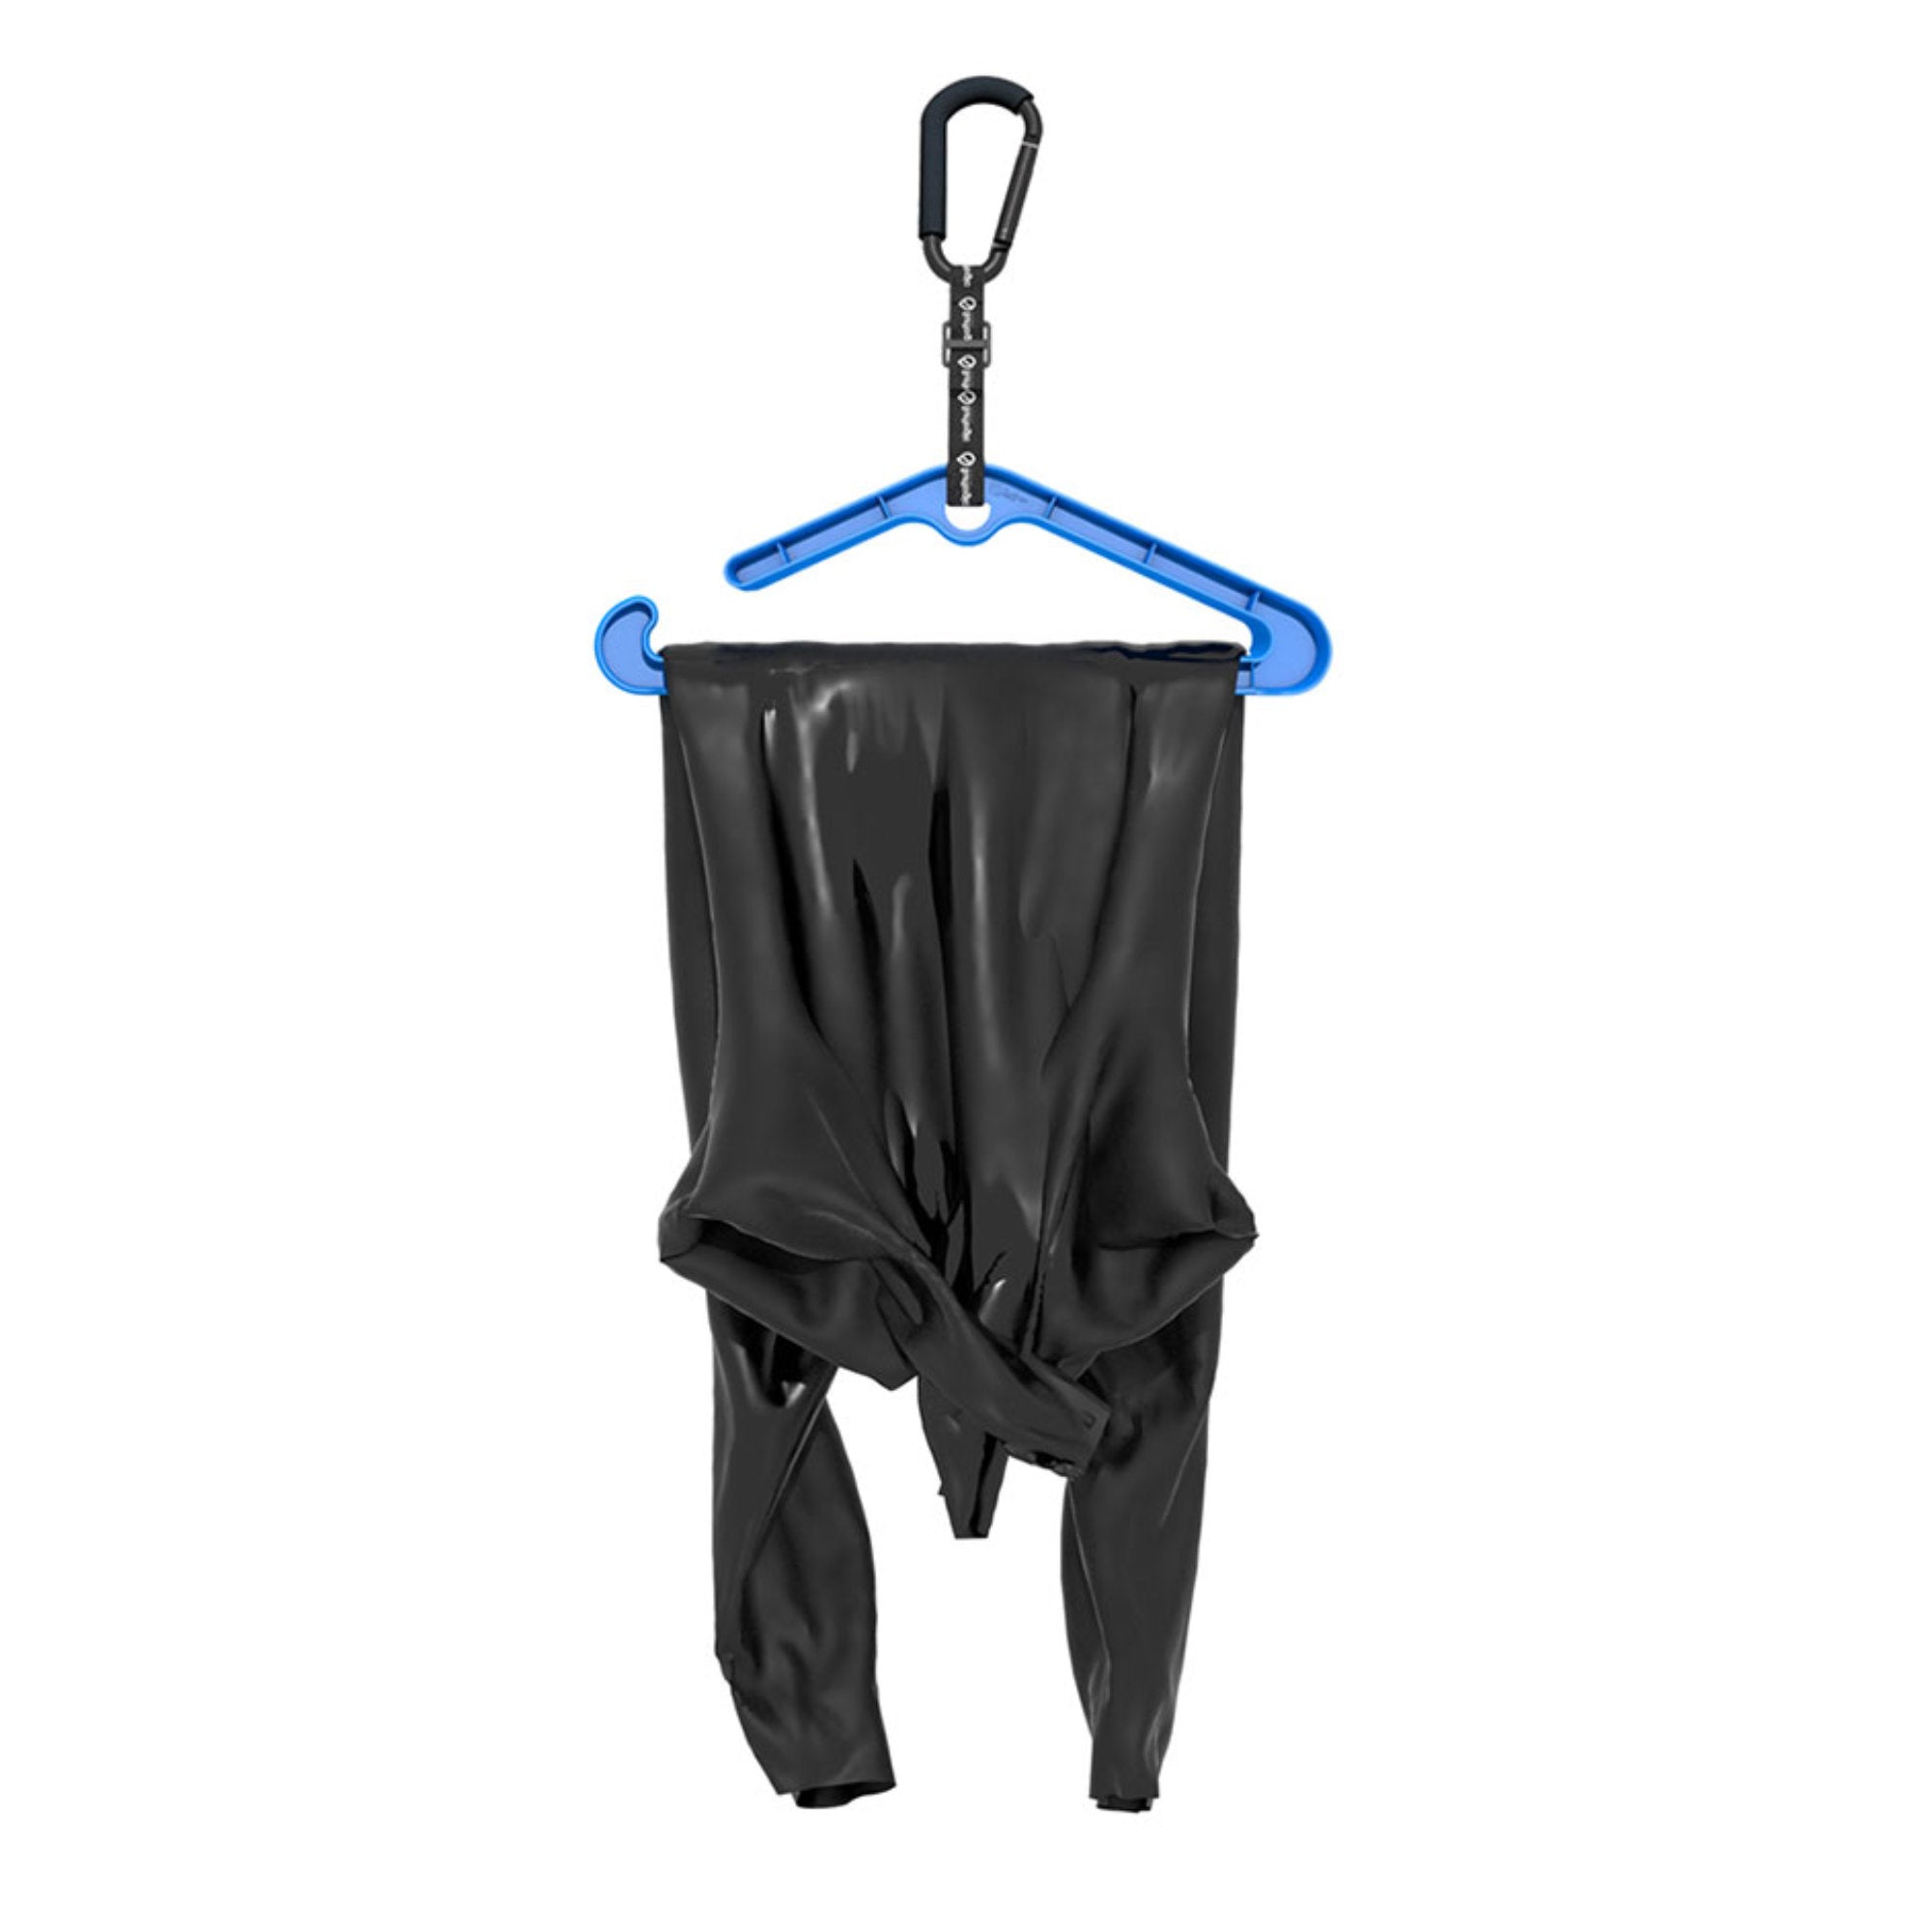 Wetsuit Hanger Pro Double System